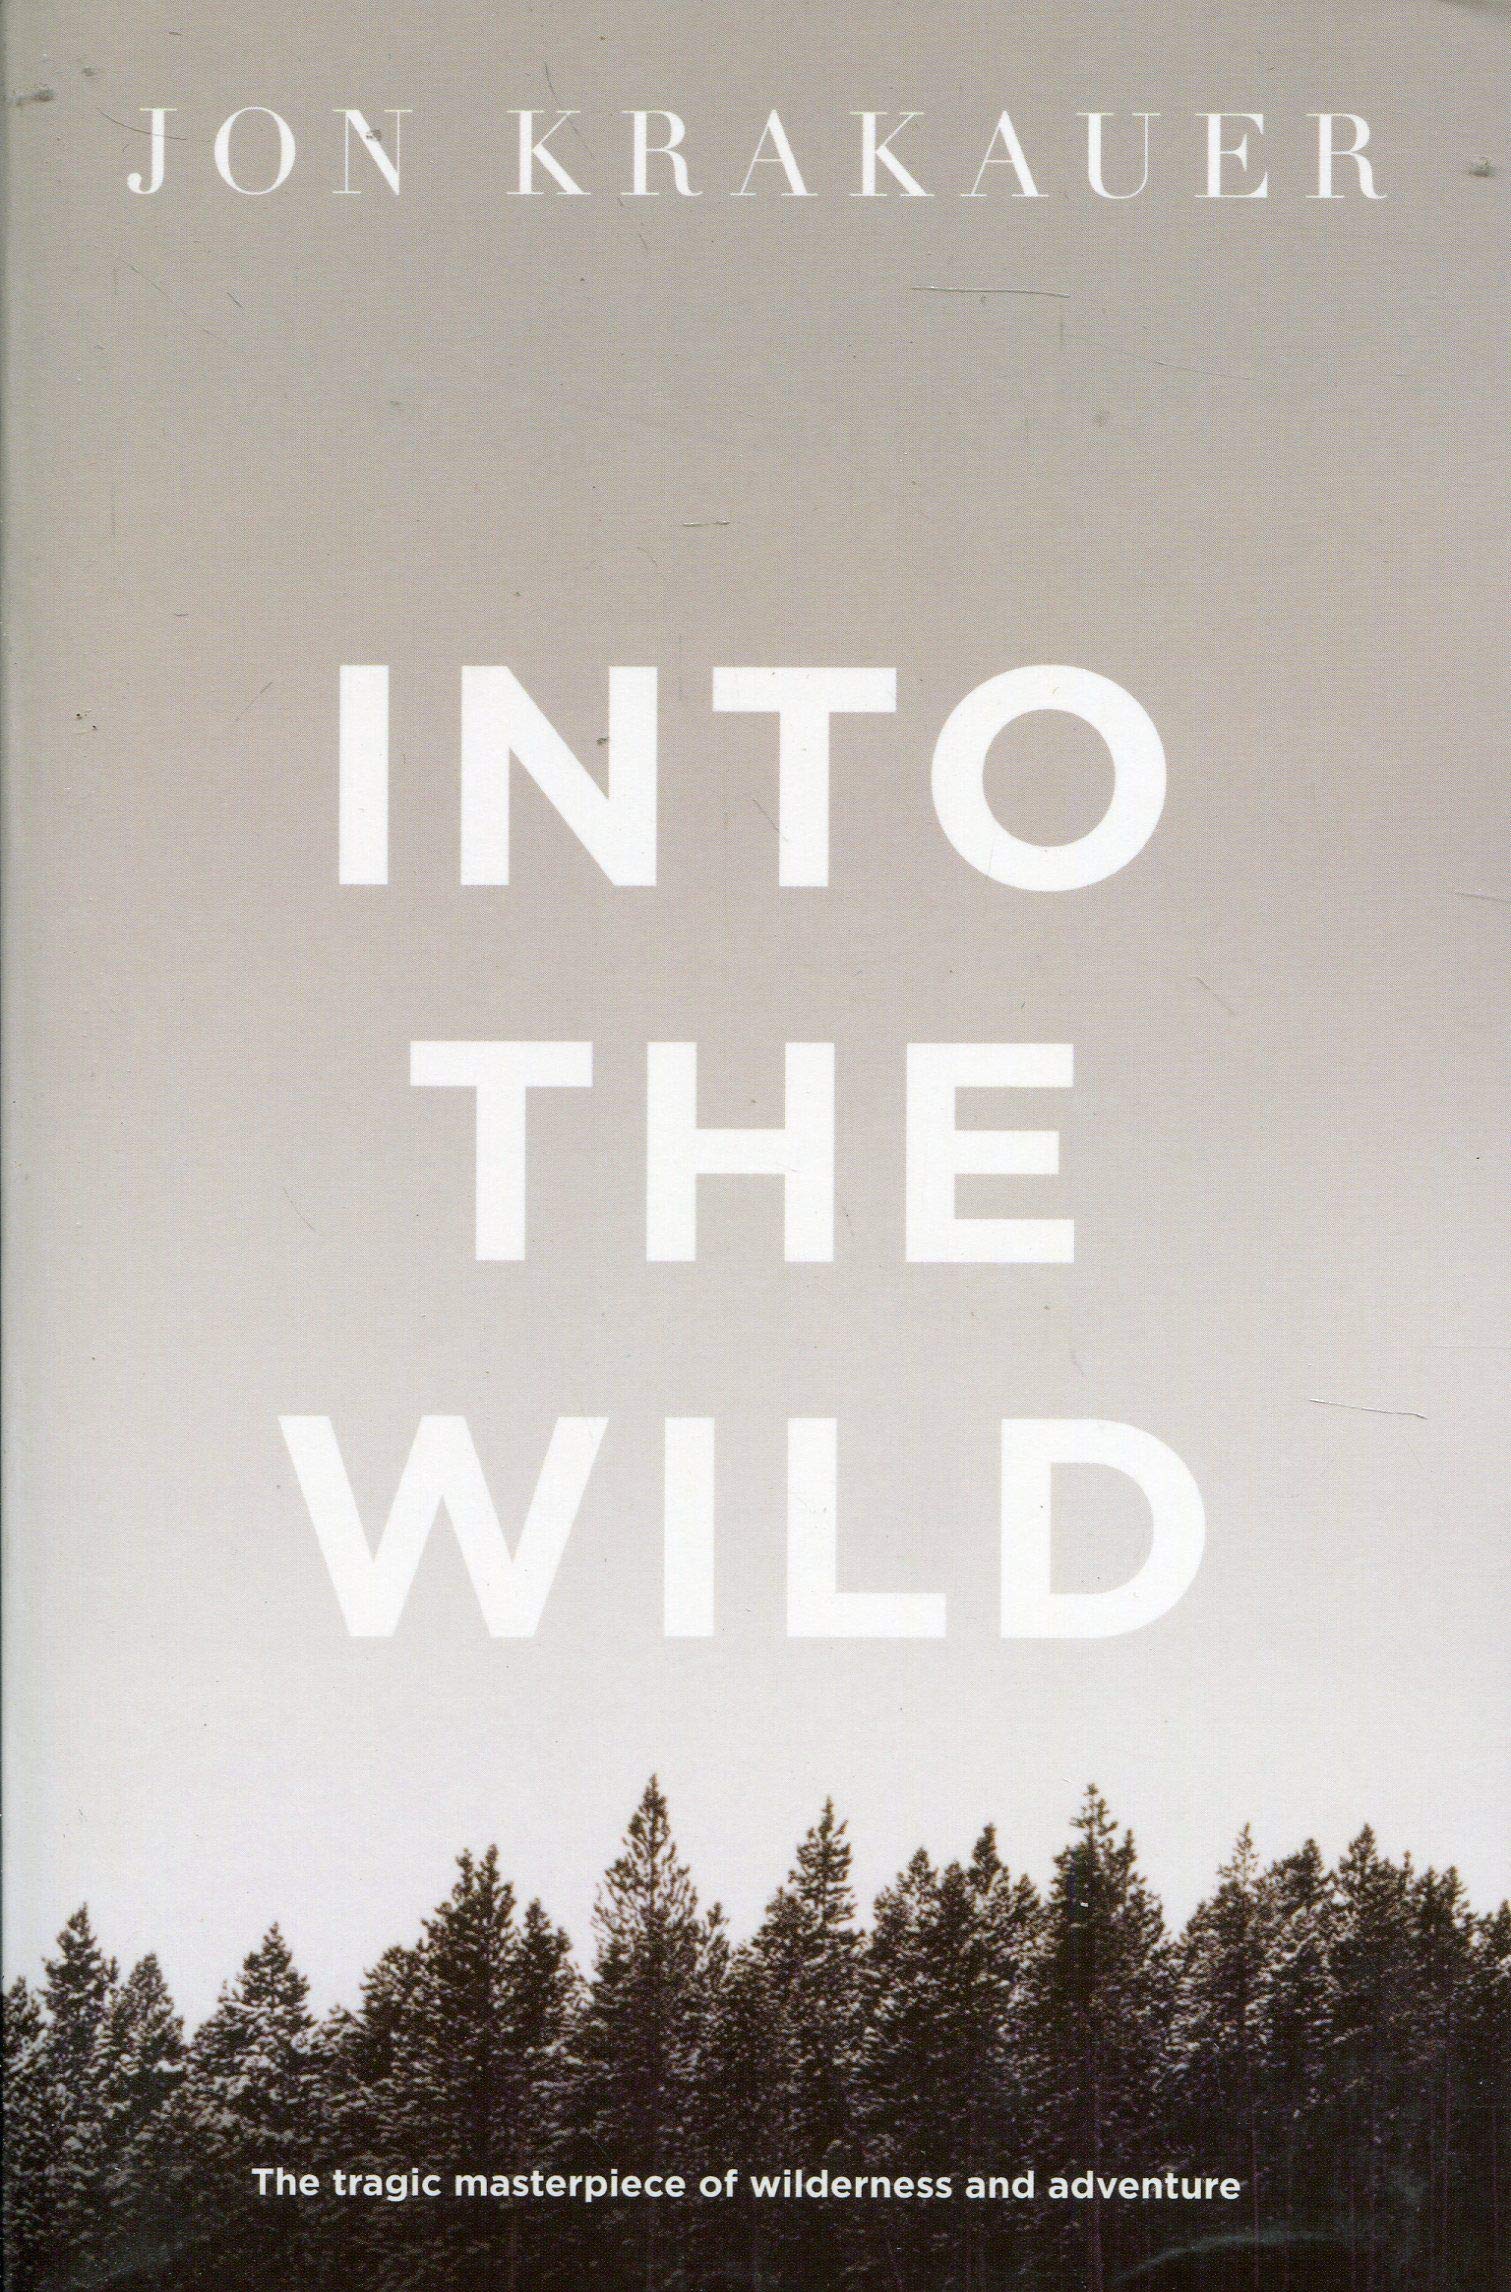 Into the wild audiobook - a non-fiction book by Jon Krakauer